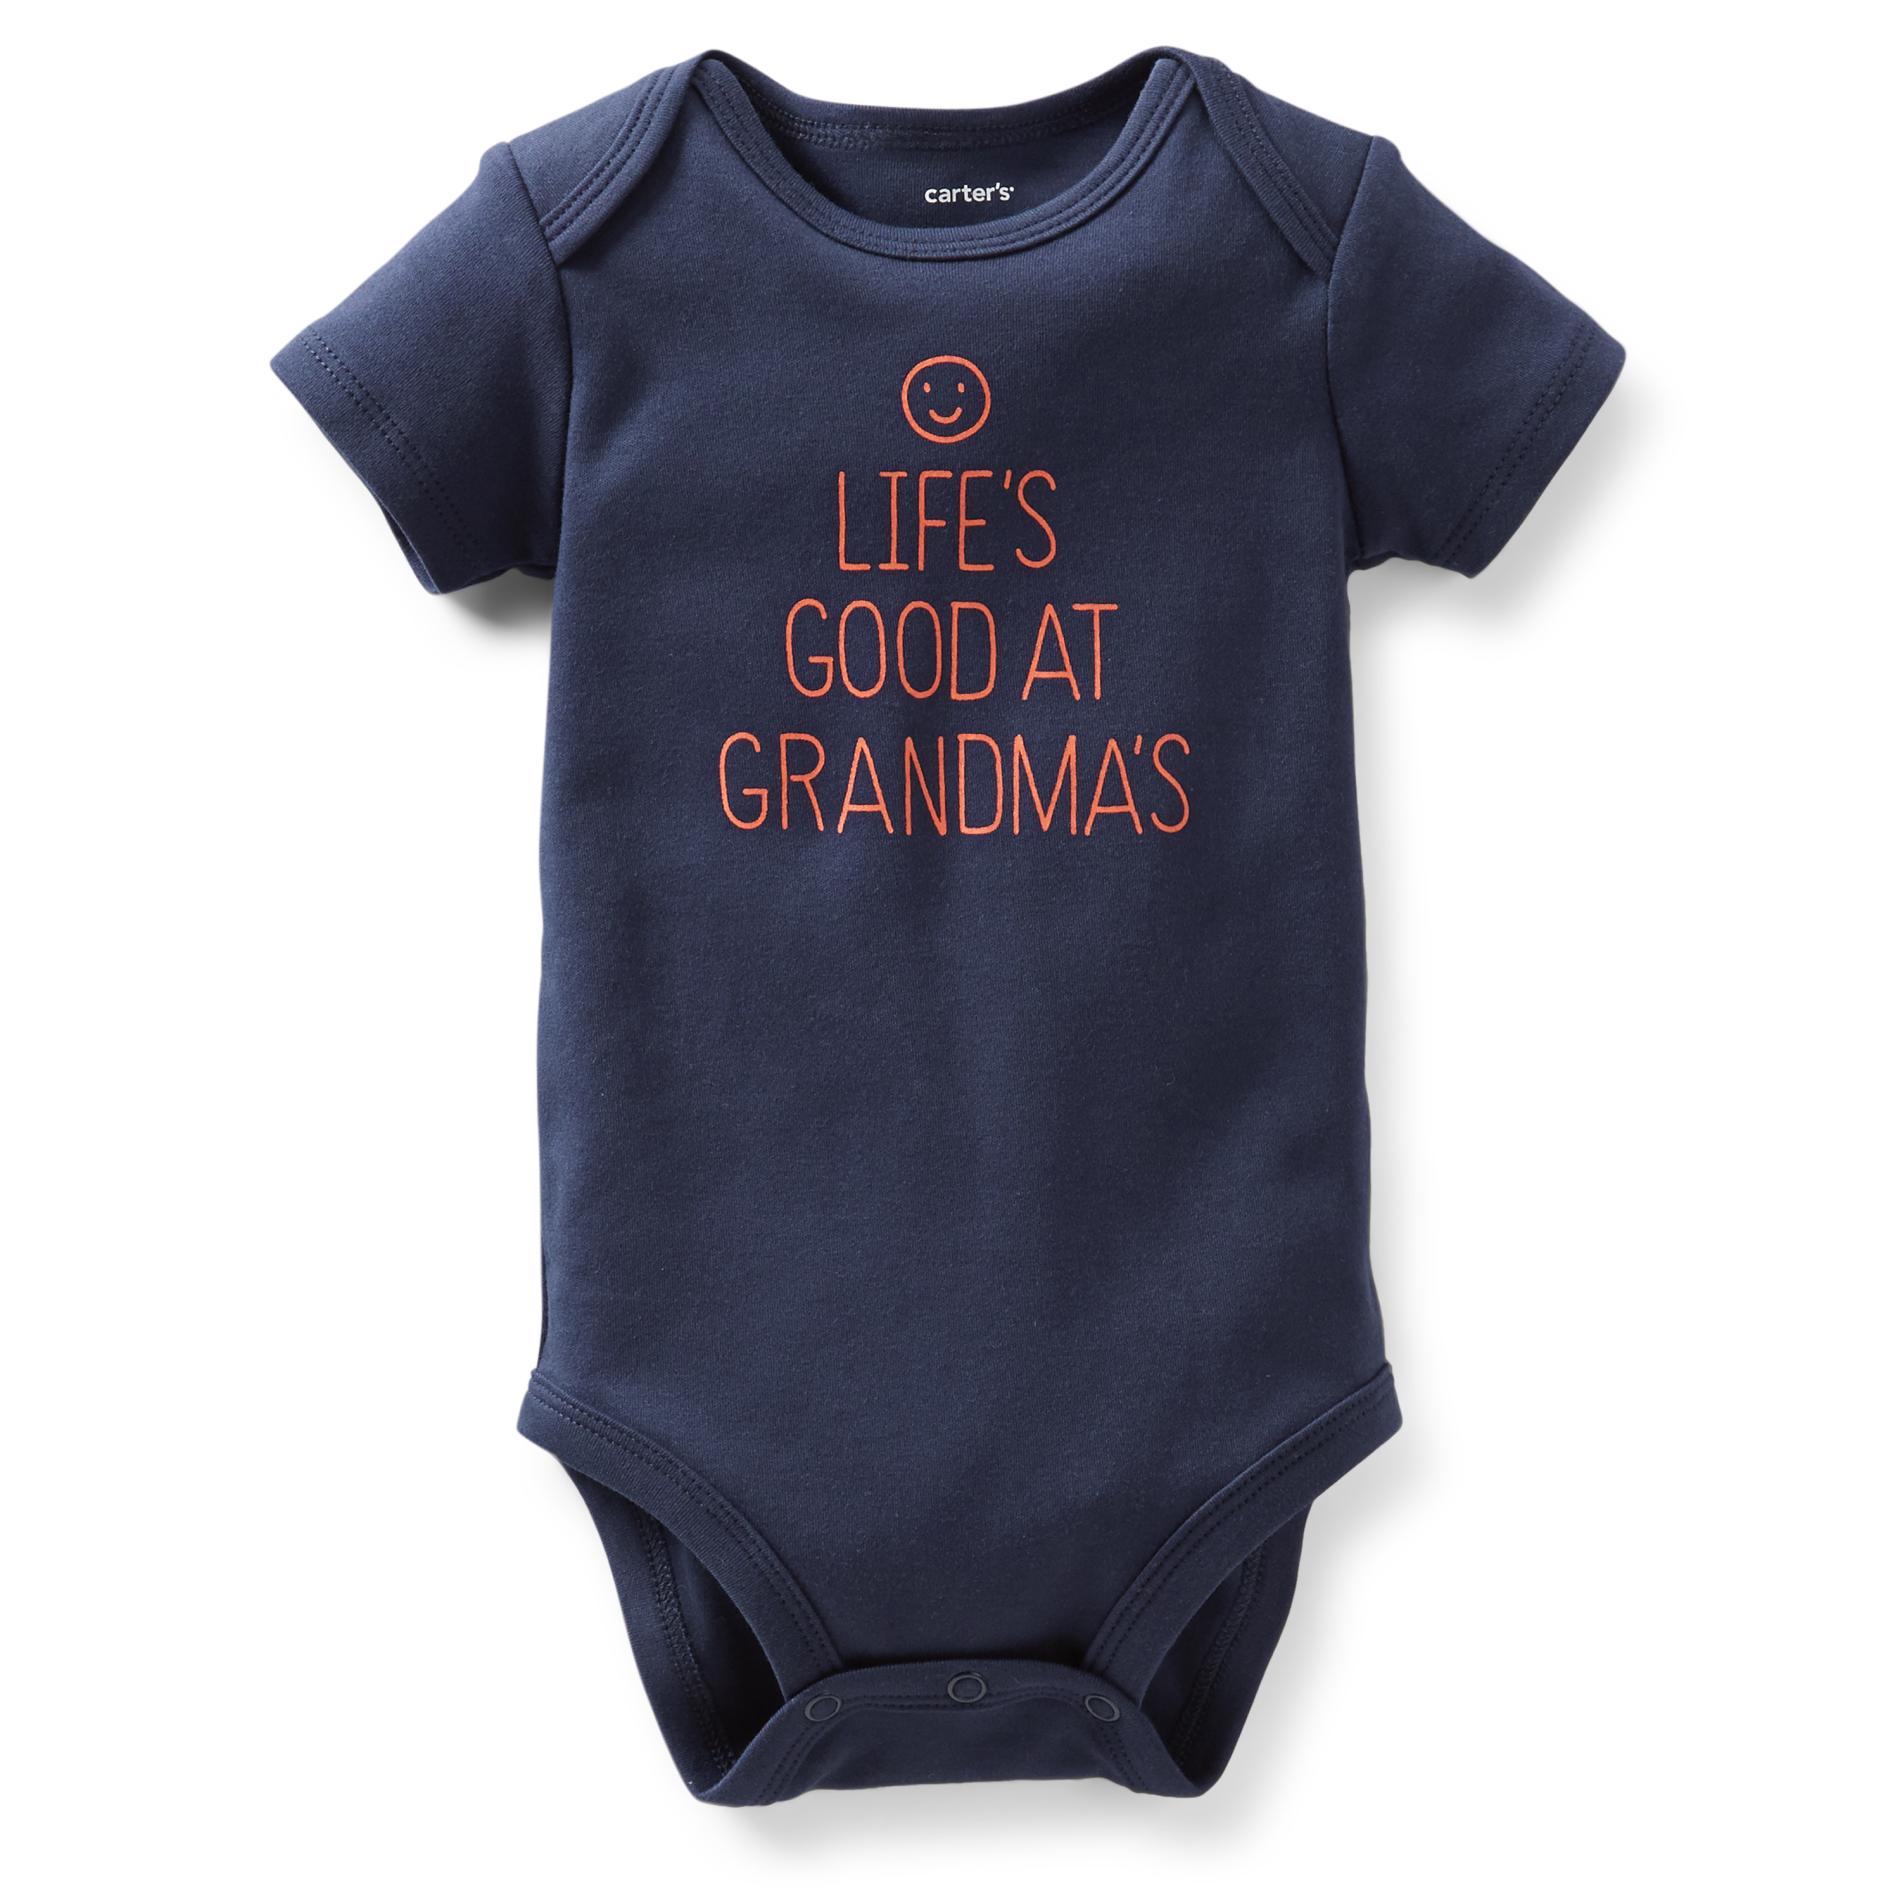 Carter's Newborn & Infant Boy's Bodysuit - Life's Good At Grandma's